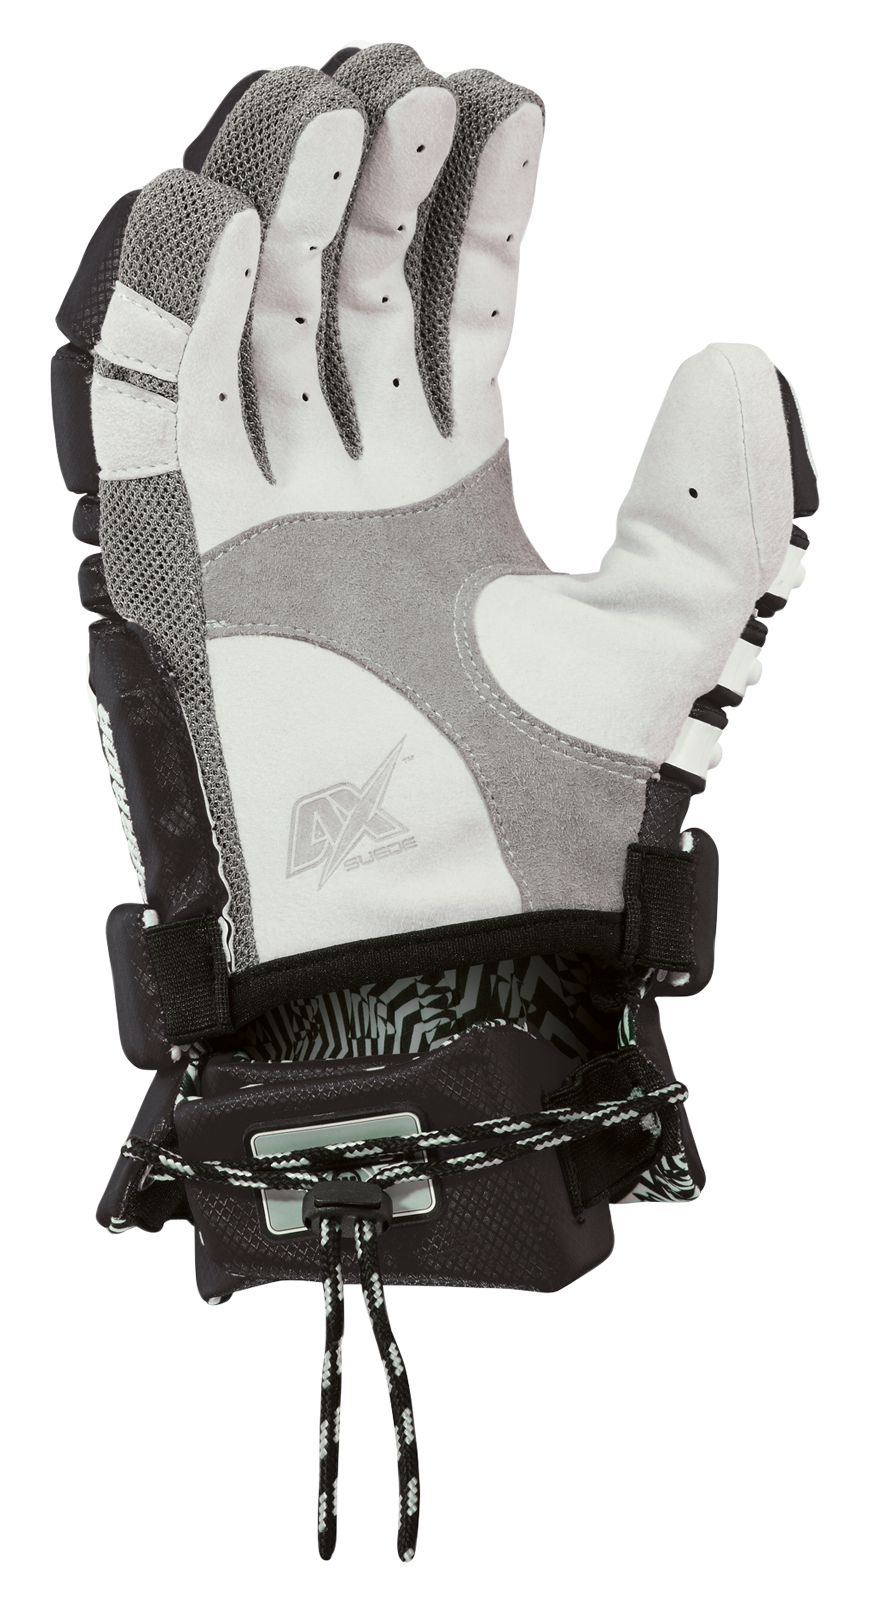 Regulator 2 Glove , Black with White image number 1